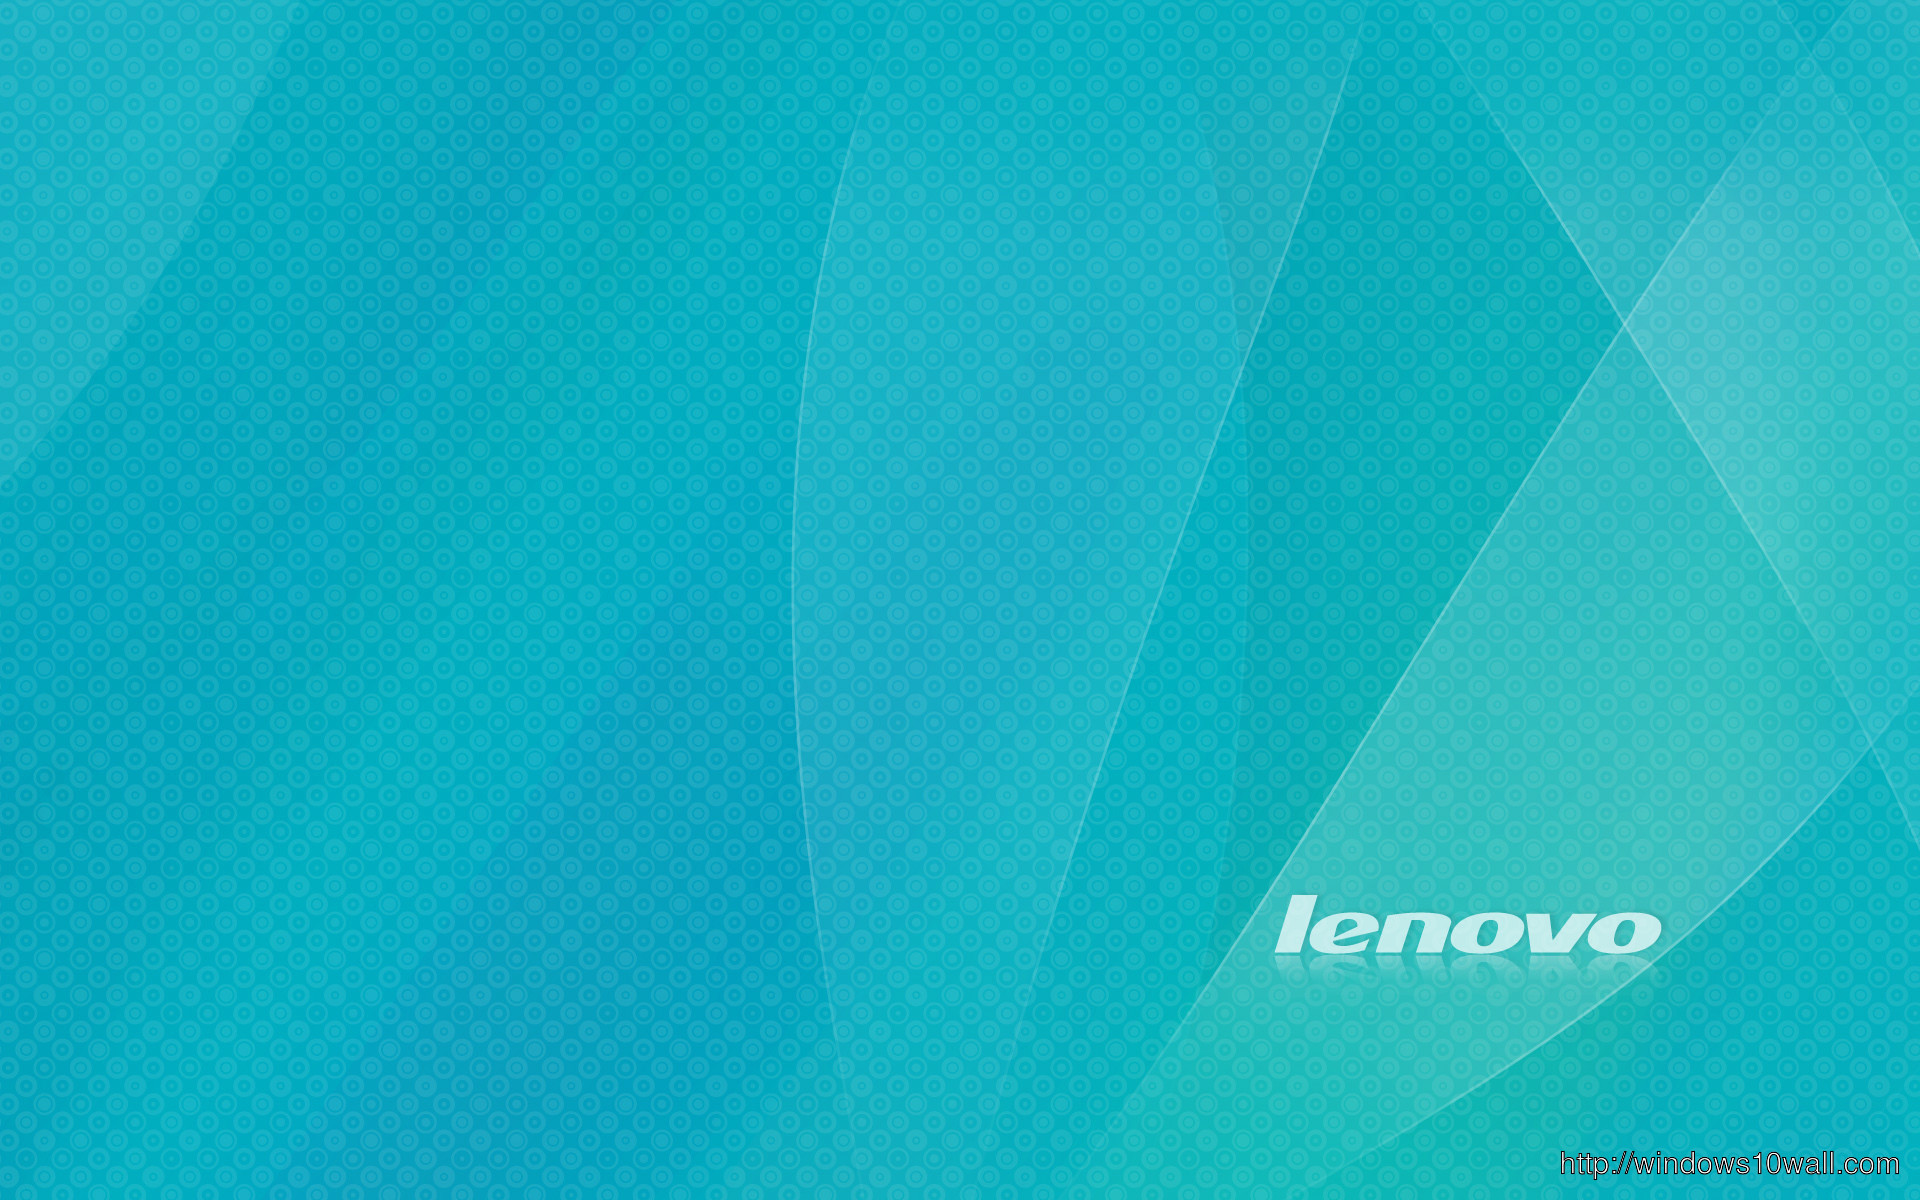 1920x1200 0 Lenovo 4K Wallpaper | WallpaperSafari Lenovo Background Wallpapers